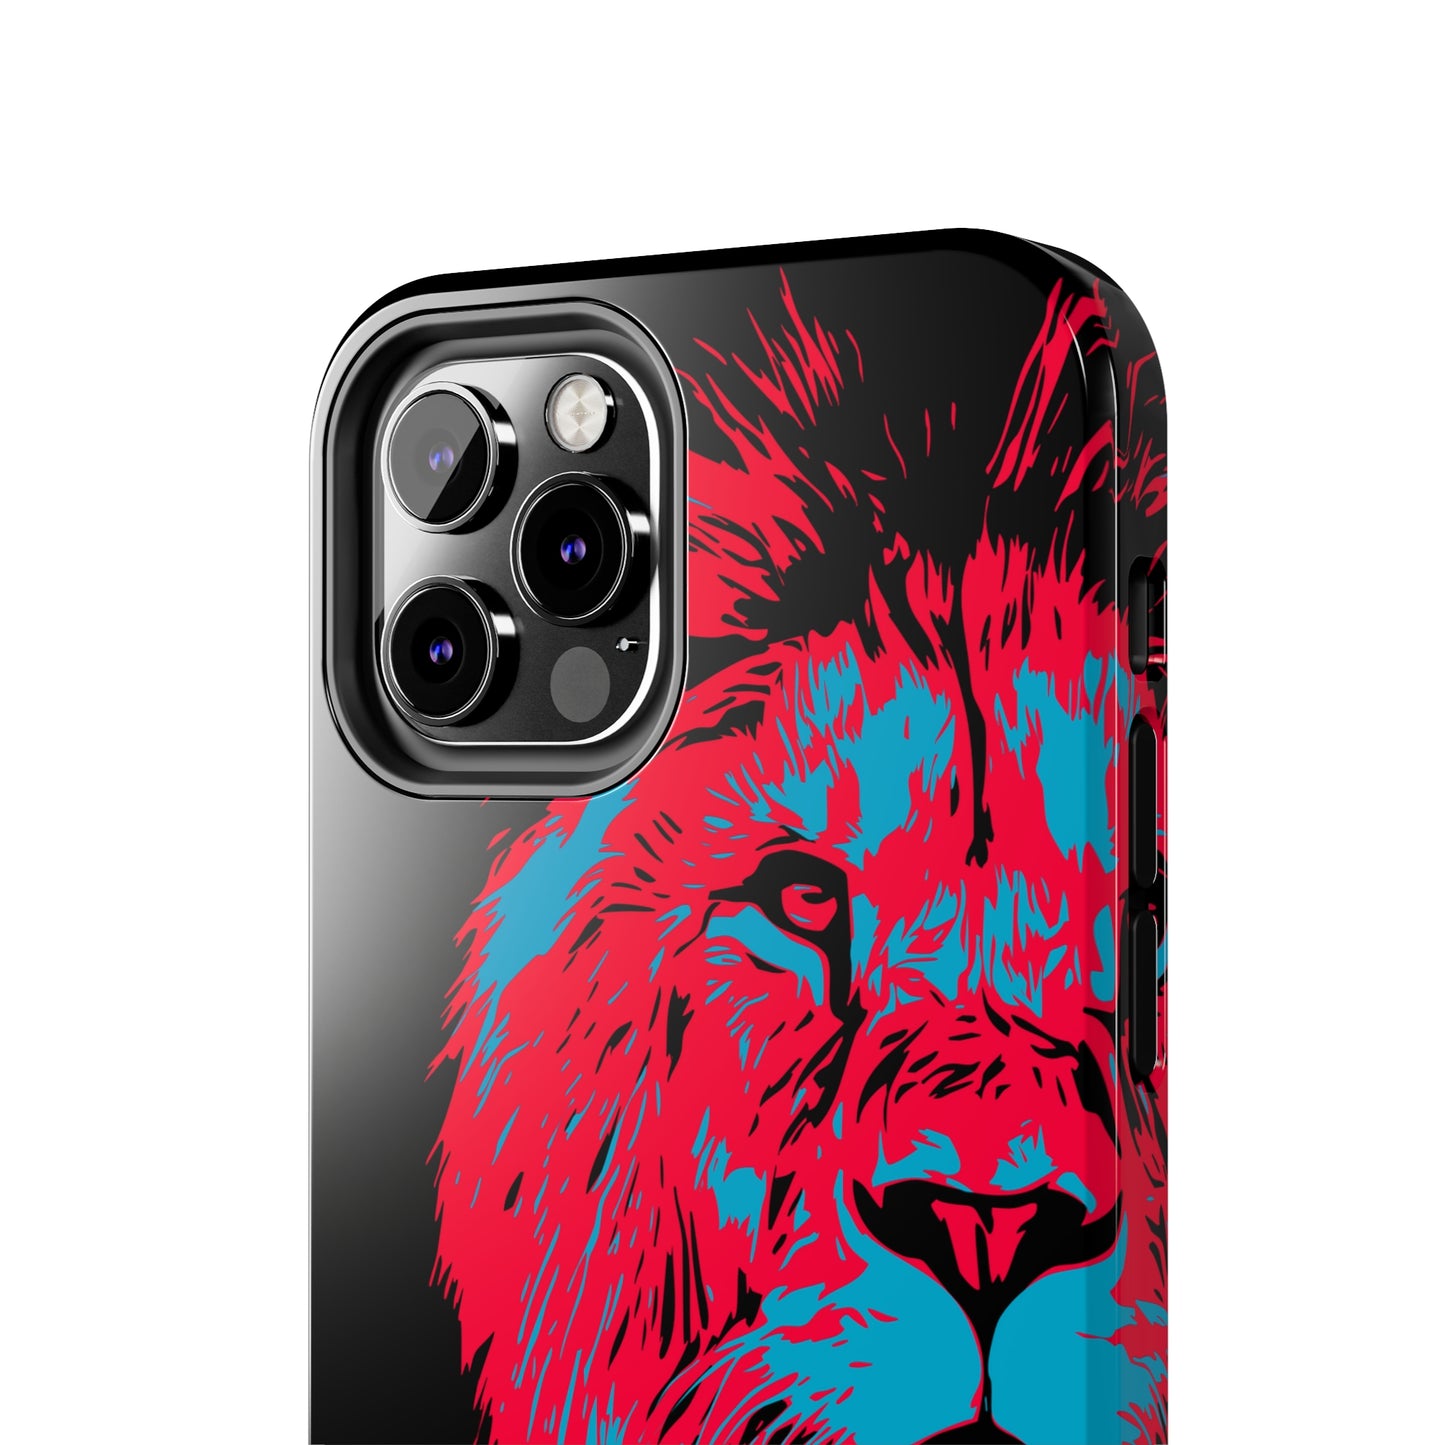 Lion of Judah - Tough Phone Cases by Nauvoo Skateboarding